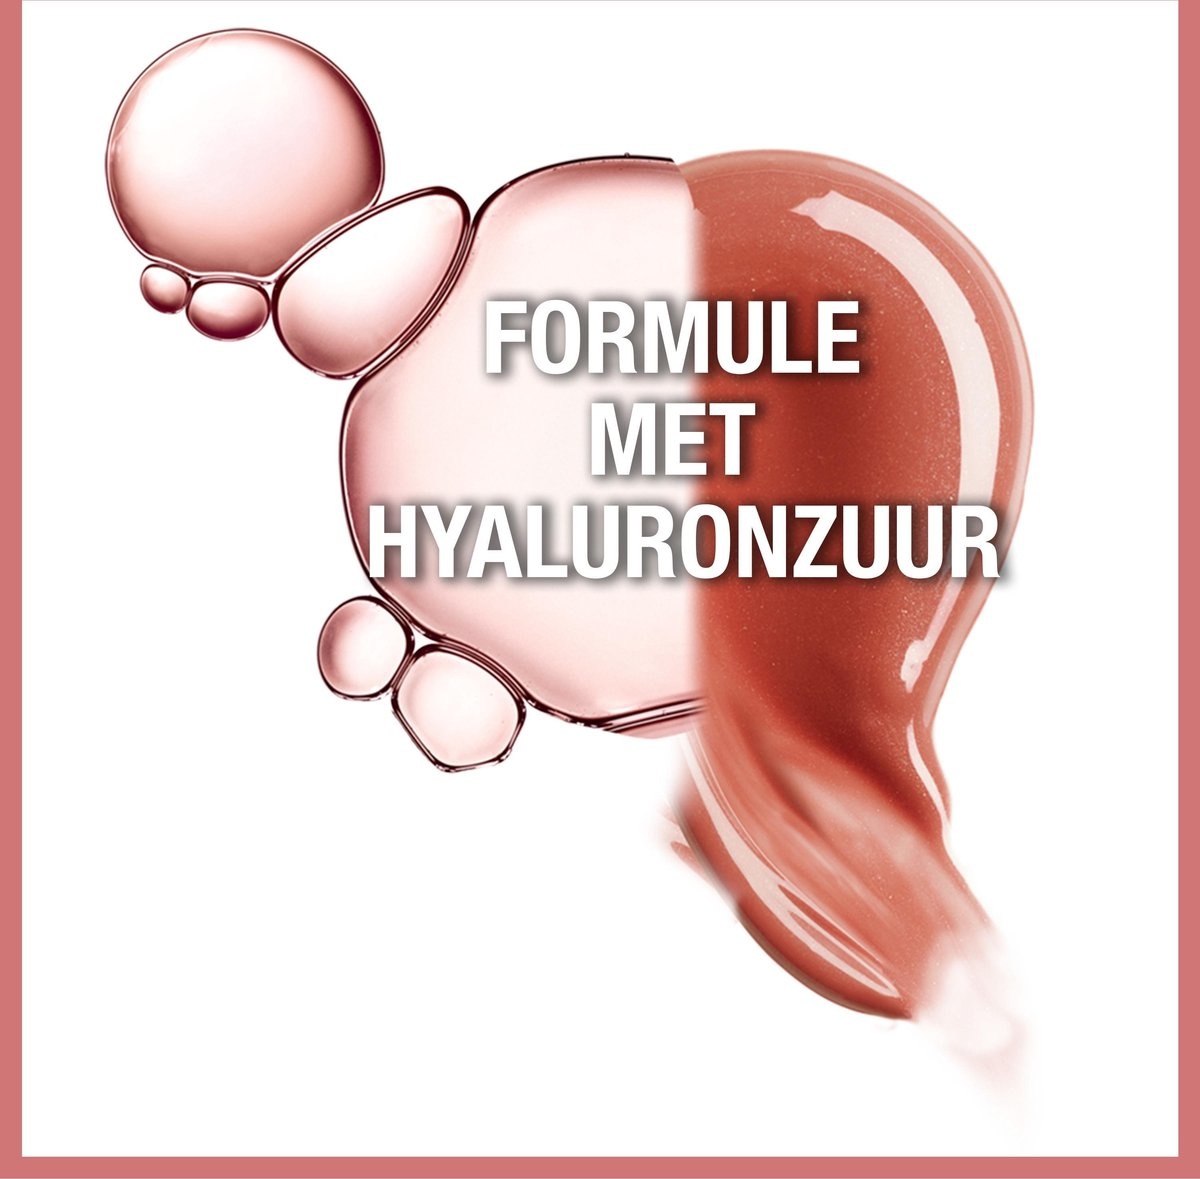 Maybelline New York - Lifter Gloss Lipgloss - Topaz - Roze - Glanzende Lipgloss - 5,4ml